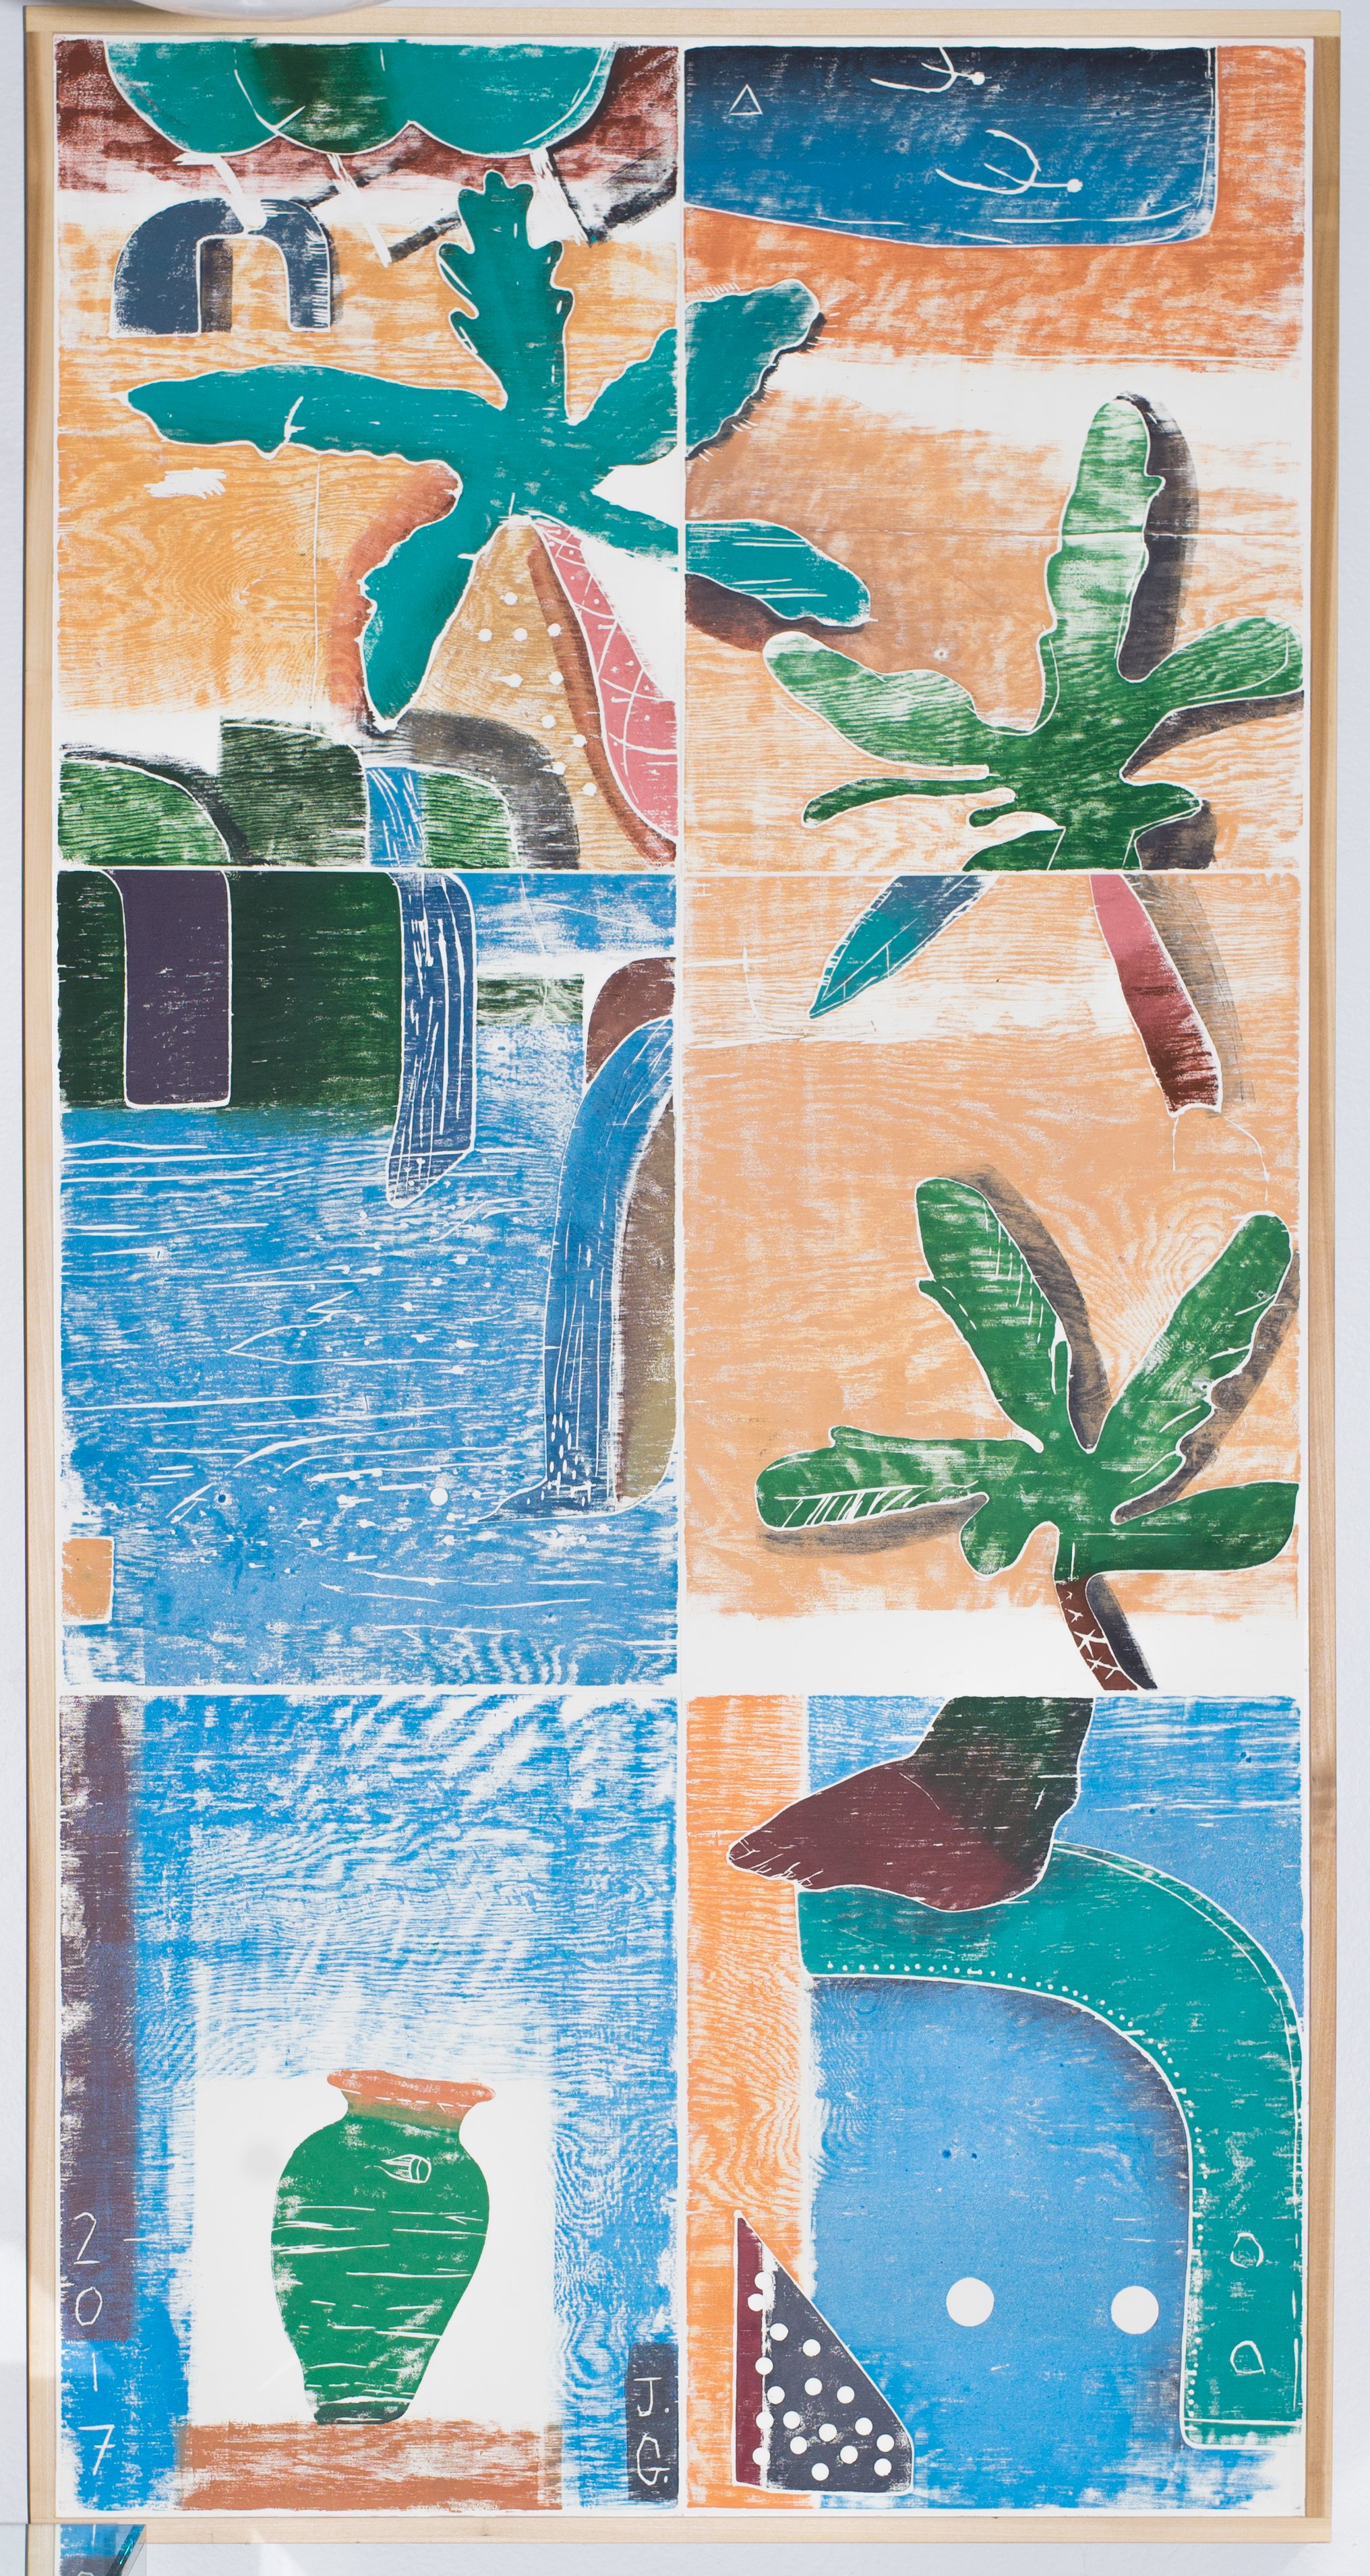   Bathers  (panel three)  multi-color woodblock monoprint  2017 